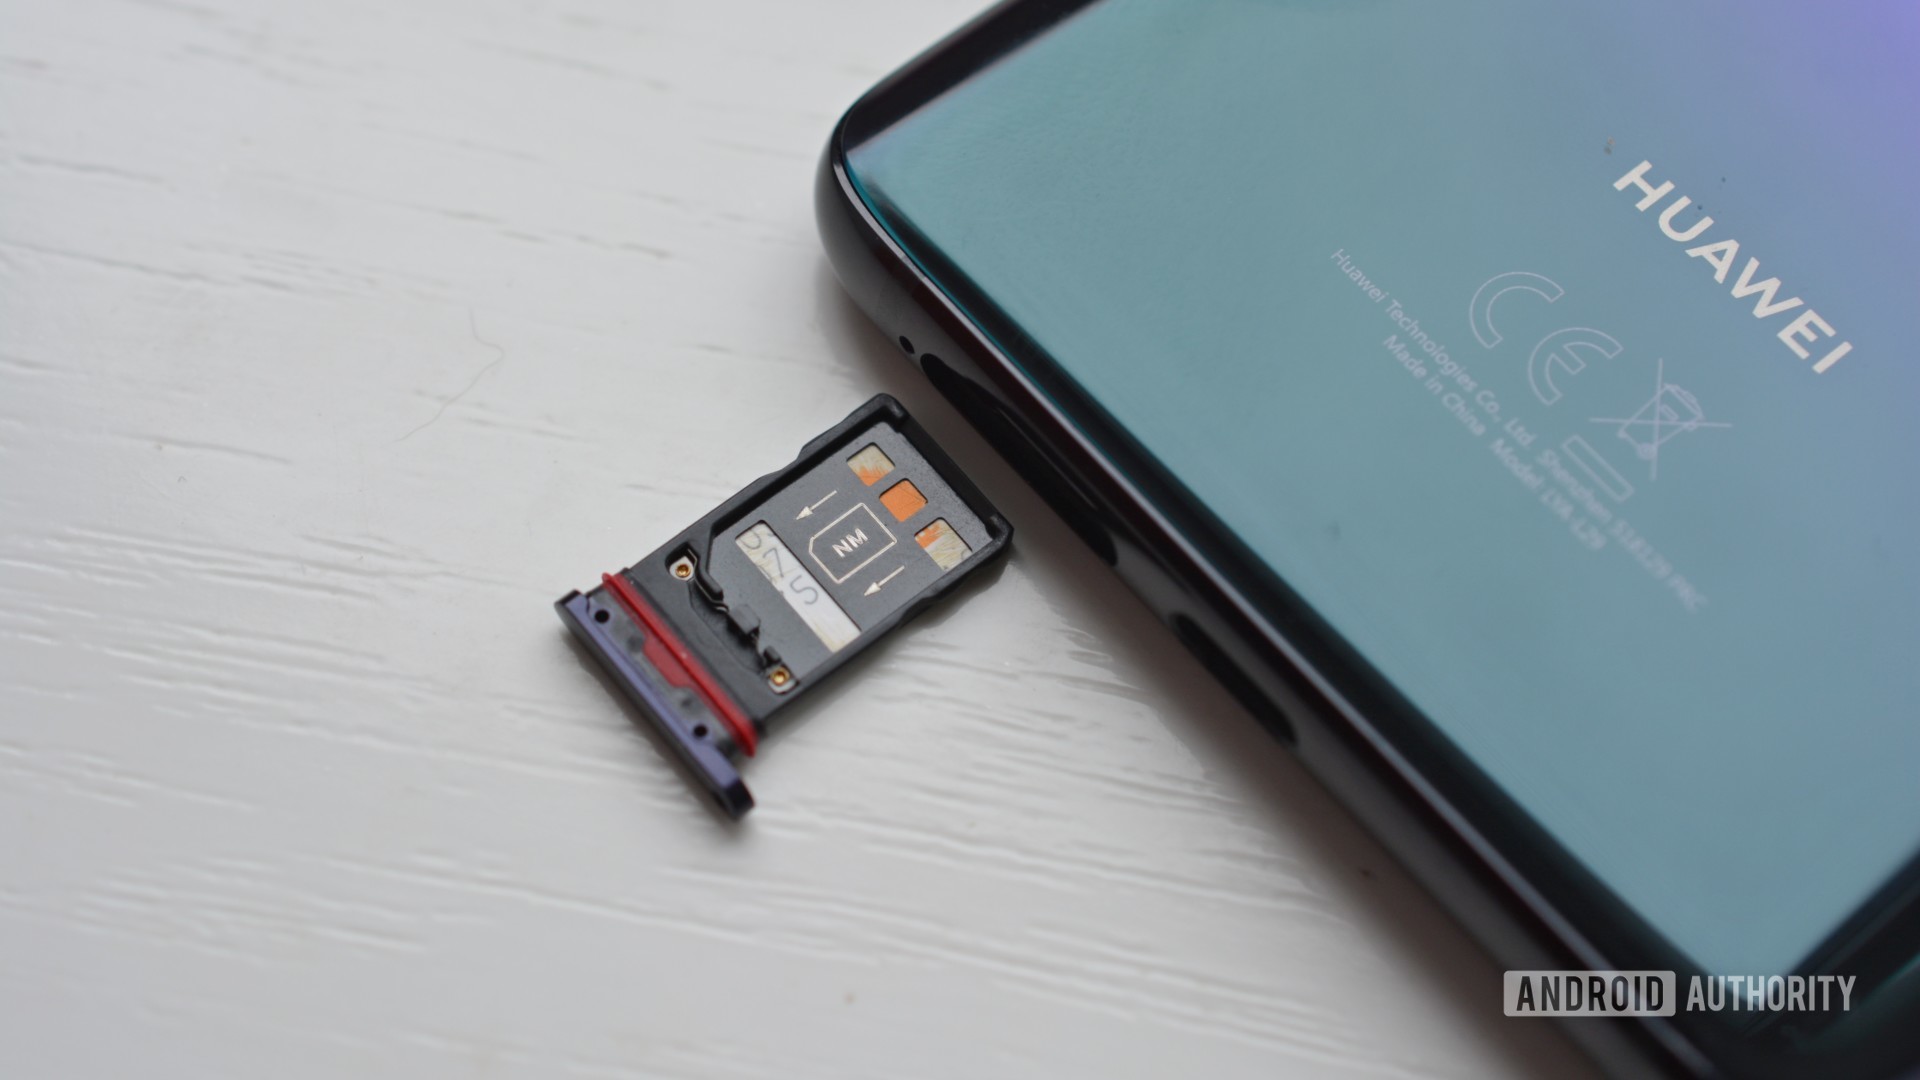 Huawei mate 20 Pro - Nano Memory card in the SIM tray slot.